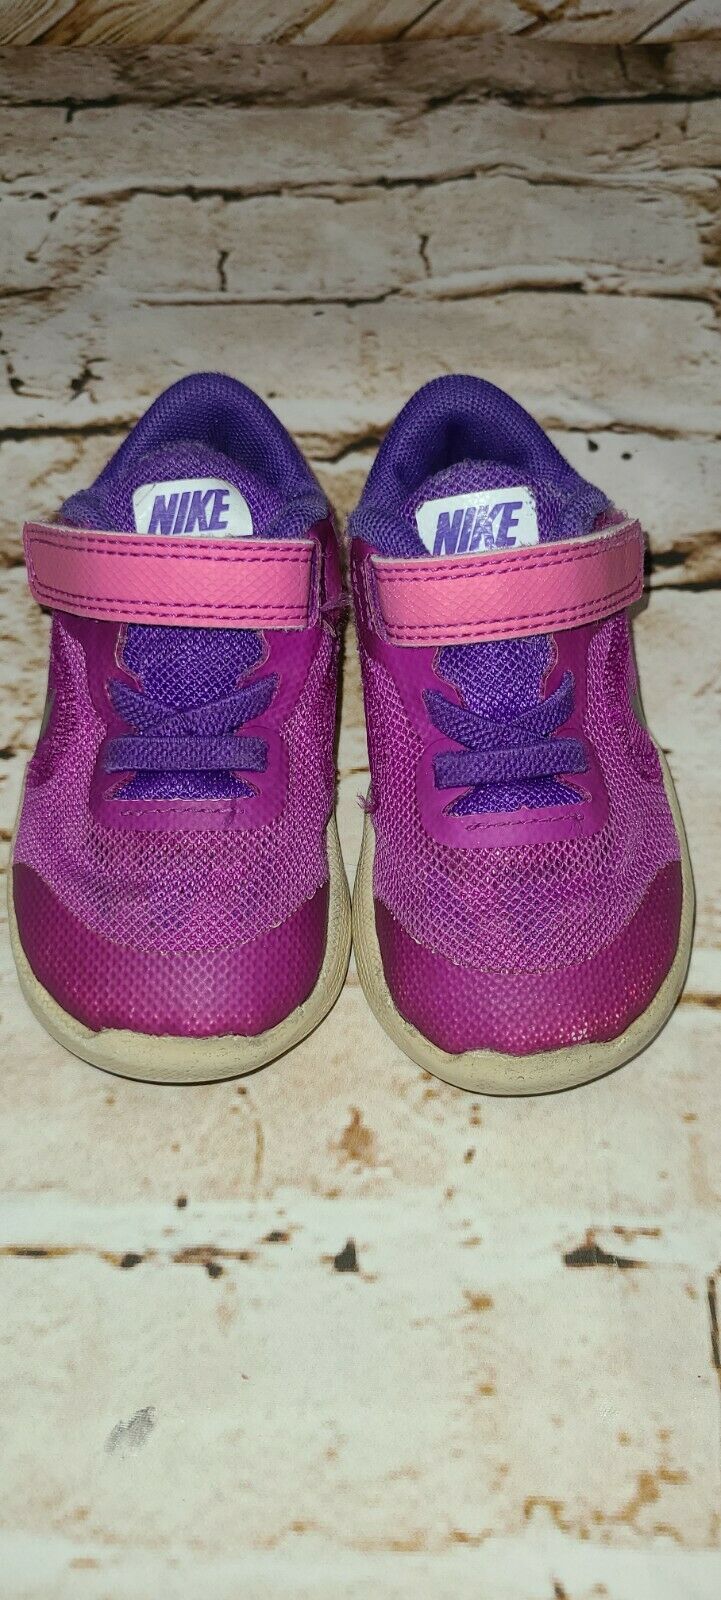 Toddler Girls Nike Shoes Purple Size 5